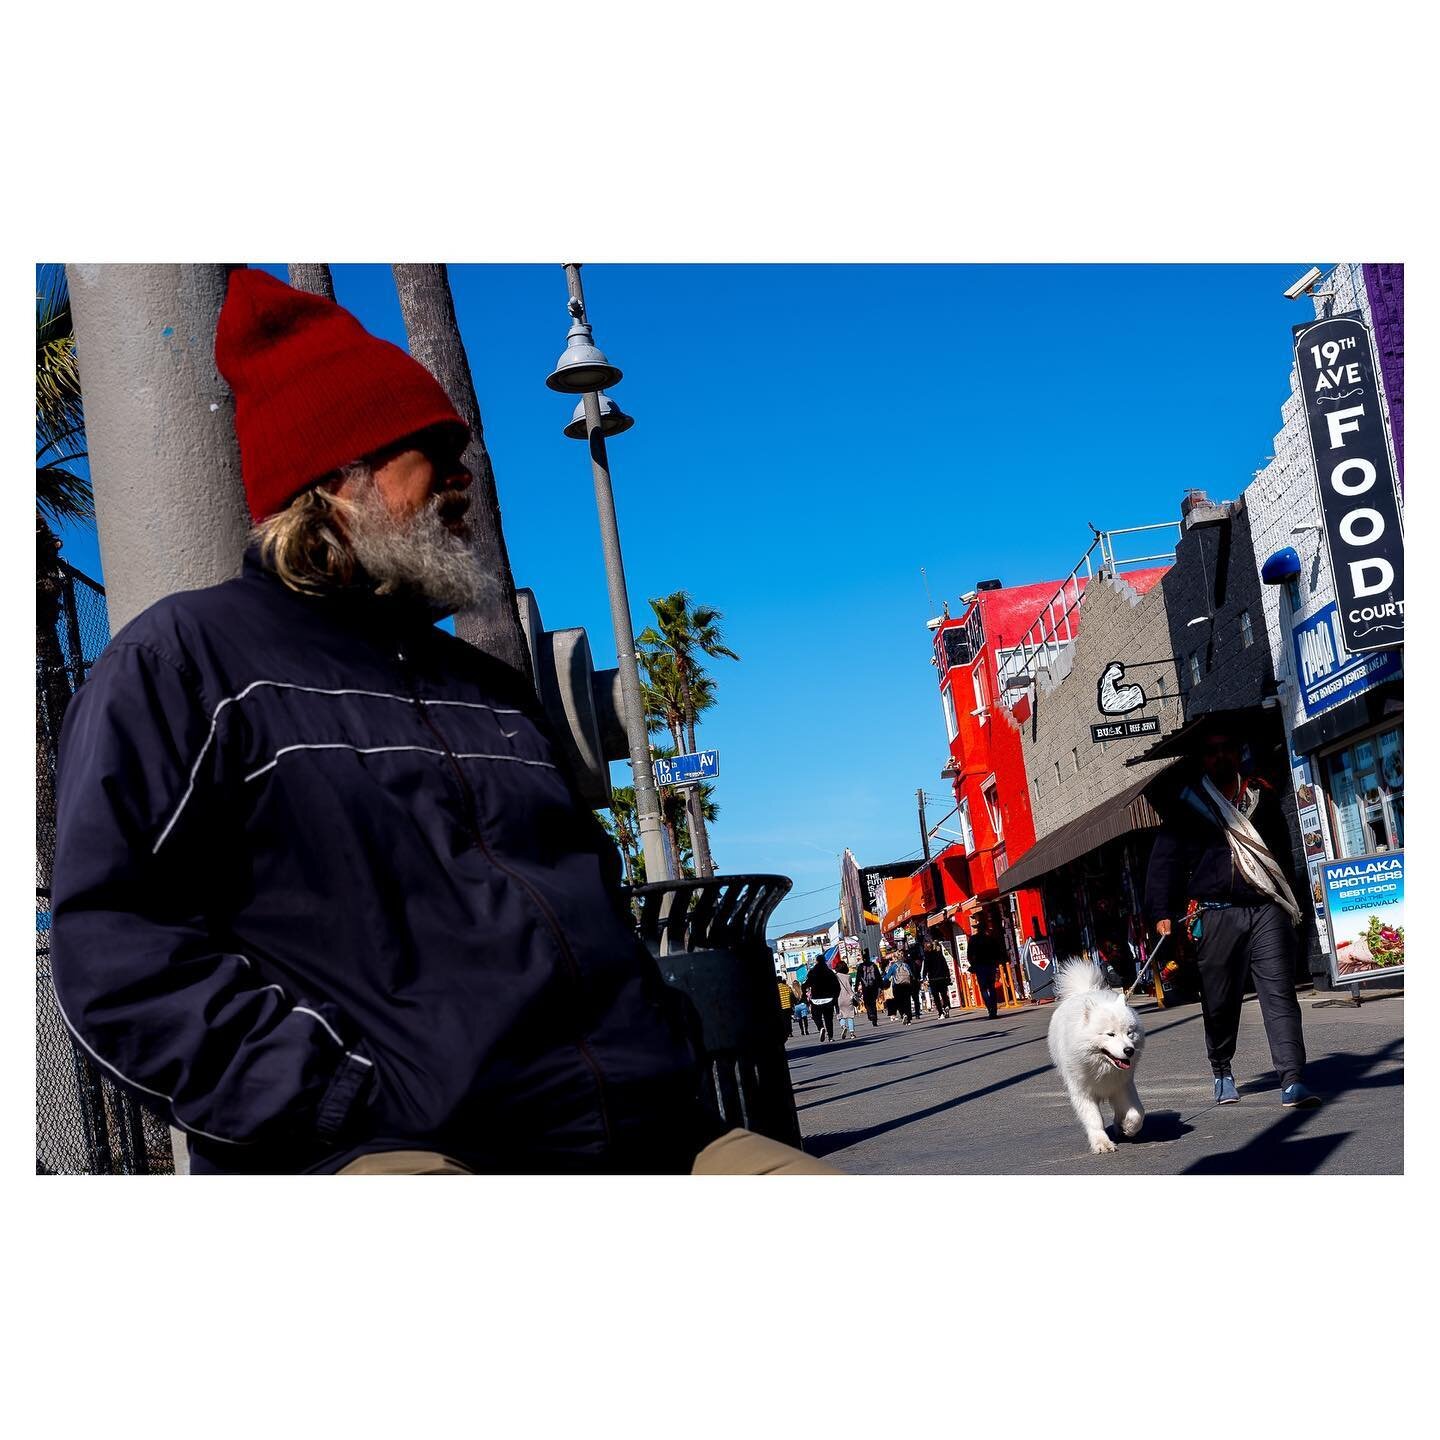 Venice Beach, LA  2020 

.
.
.
.
.
.
.

#streetphotography
#everybodystreet
#bnw_society
#bnwphotography
#street_photography 
#streetdreamsmag 
#blackandwhitestreetphotography 
#blacknwhite_perfection 
#projectasphalt
#DC_SPC
#igmasters 
#streetscene